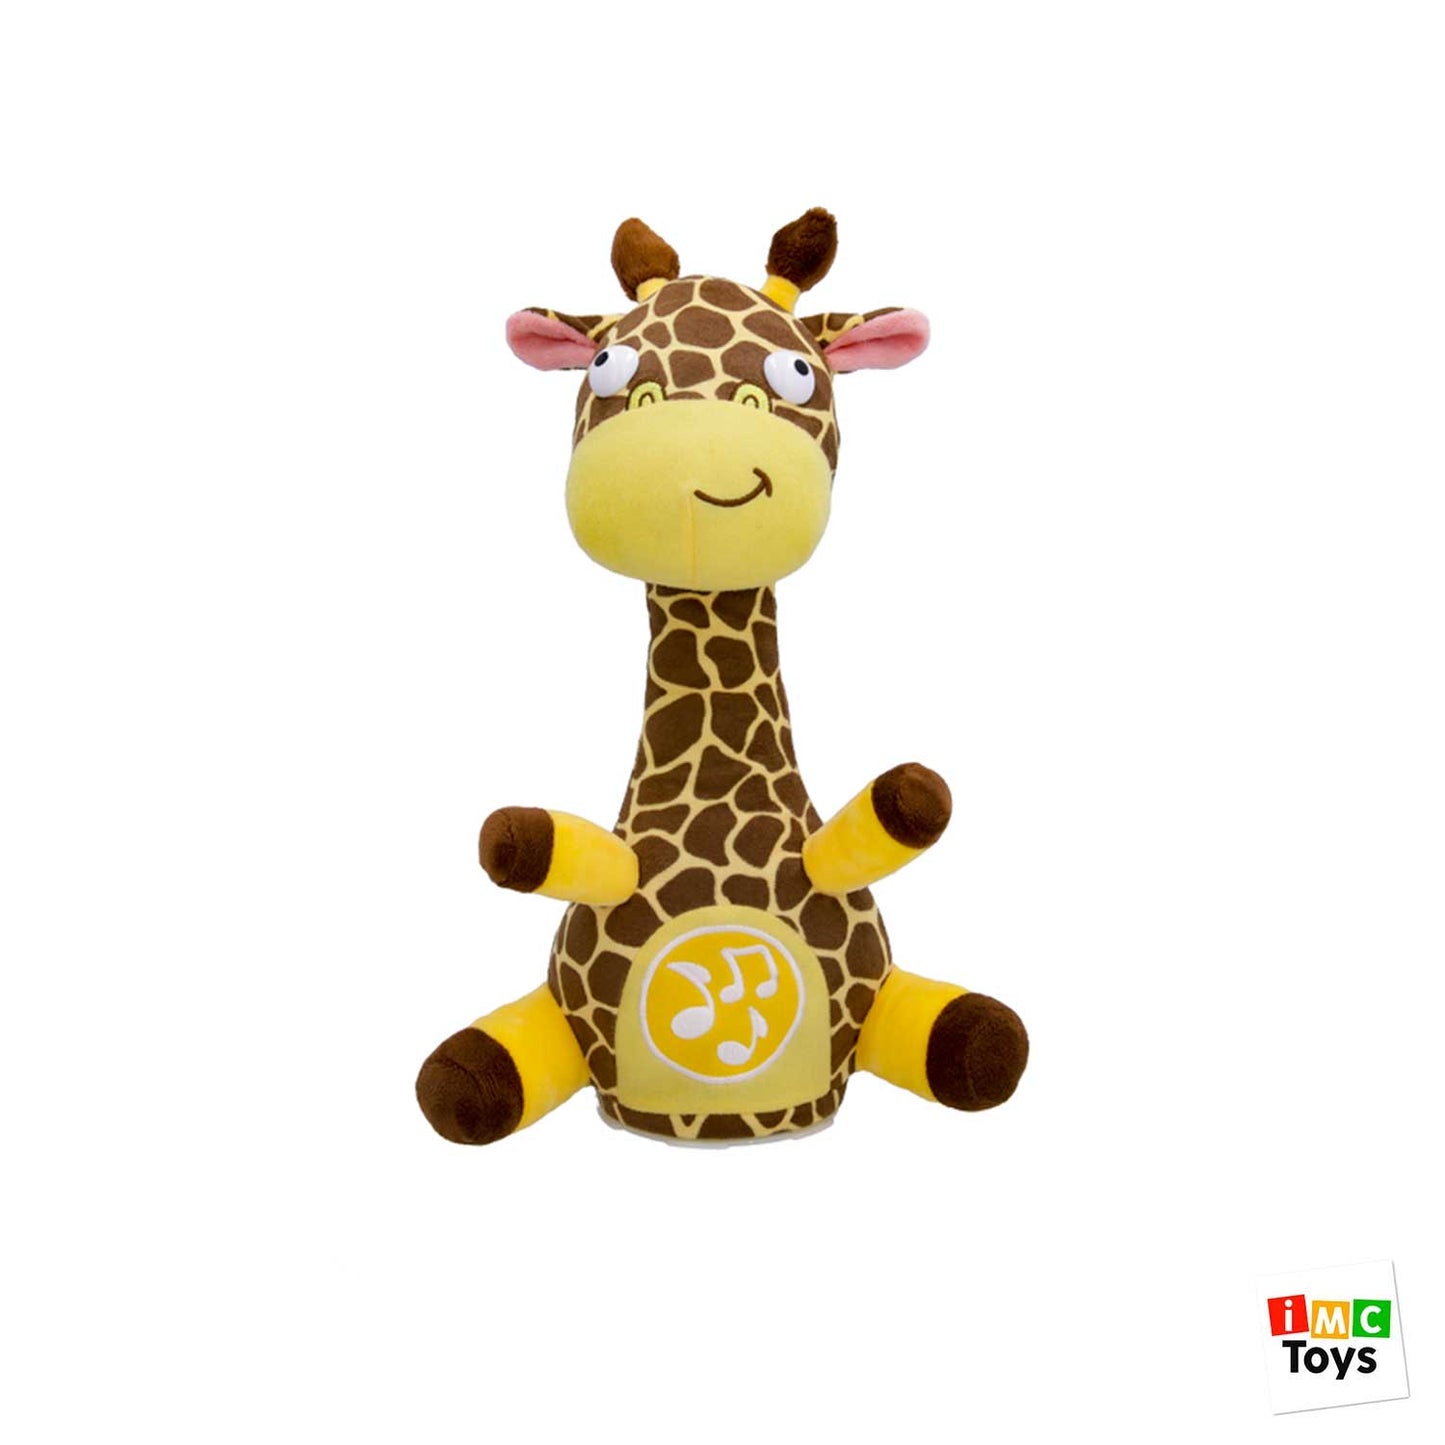 IMC Toys - Club Petz Georgina the Giraffe interactive soft toy